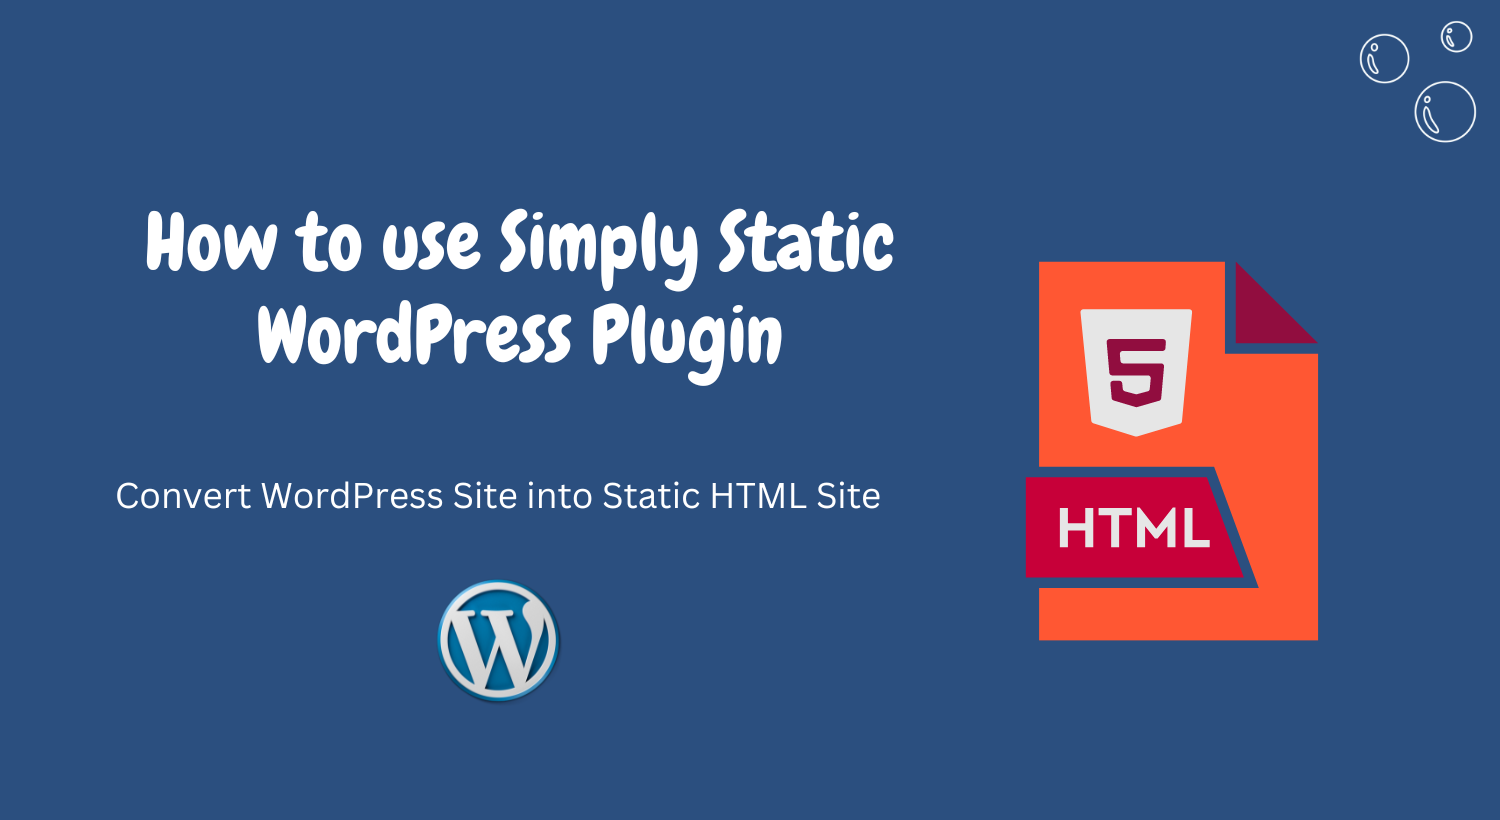 Simply Static WordPress Plugin